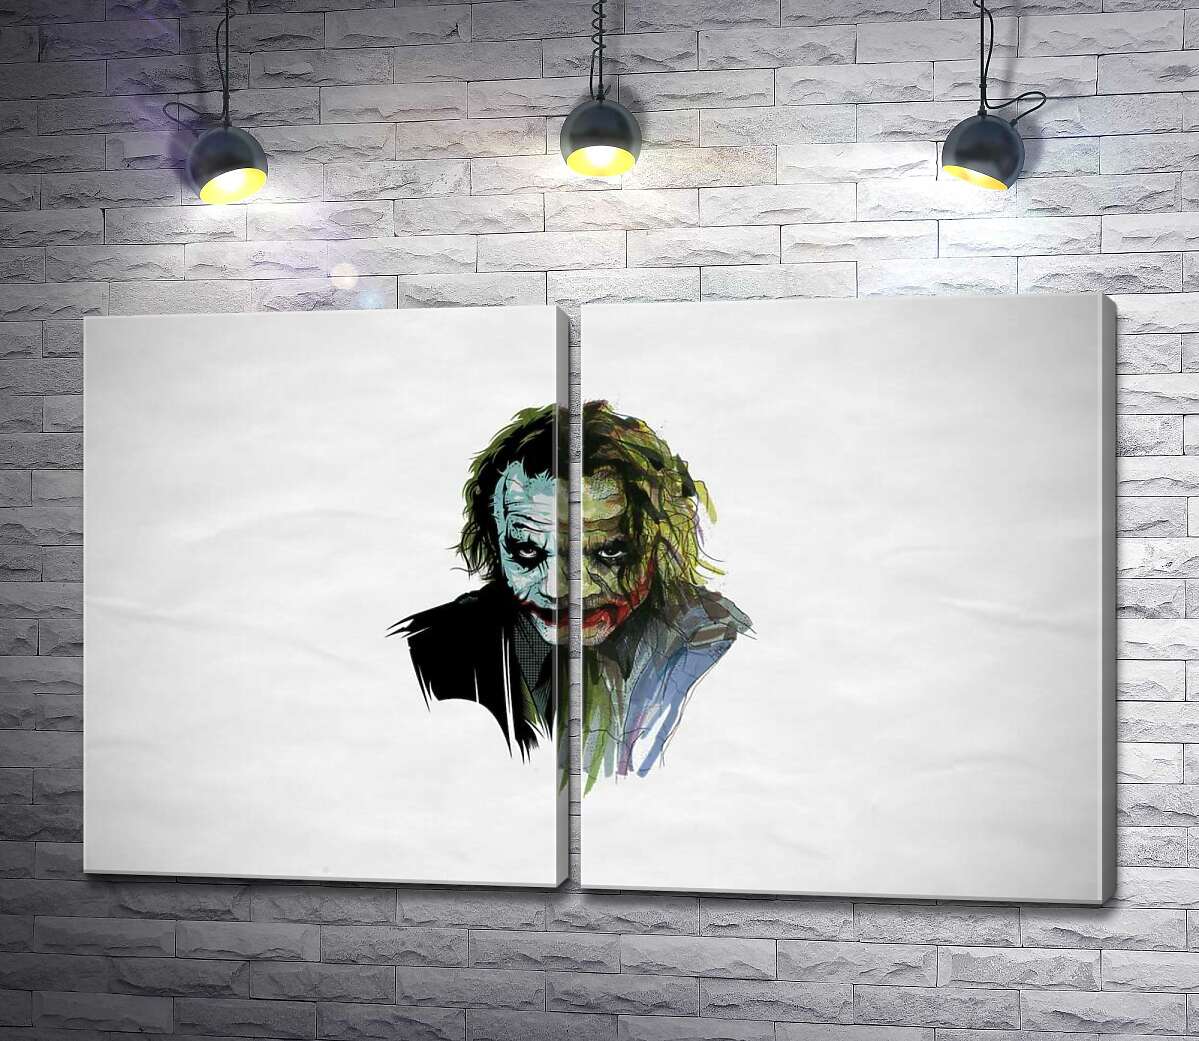 модульна картина Арт-портрет Джокера (Joker) із загрозливим поглядом